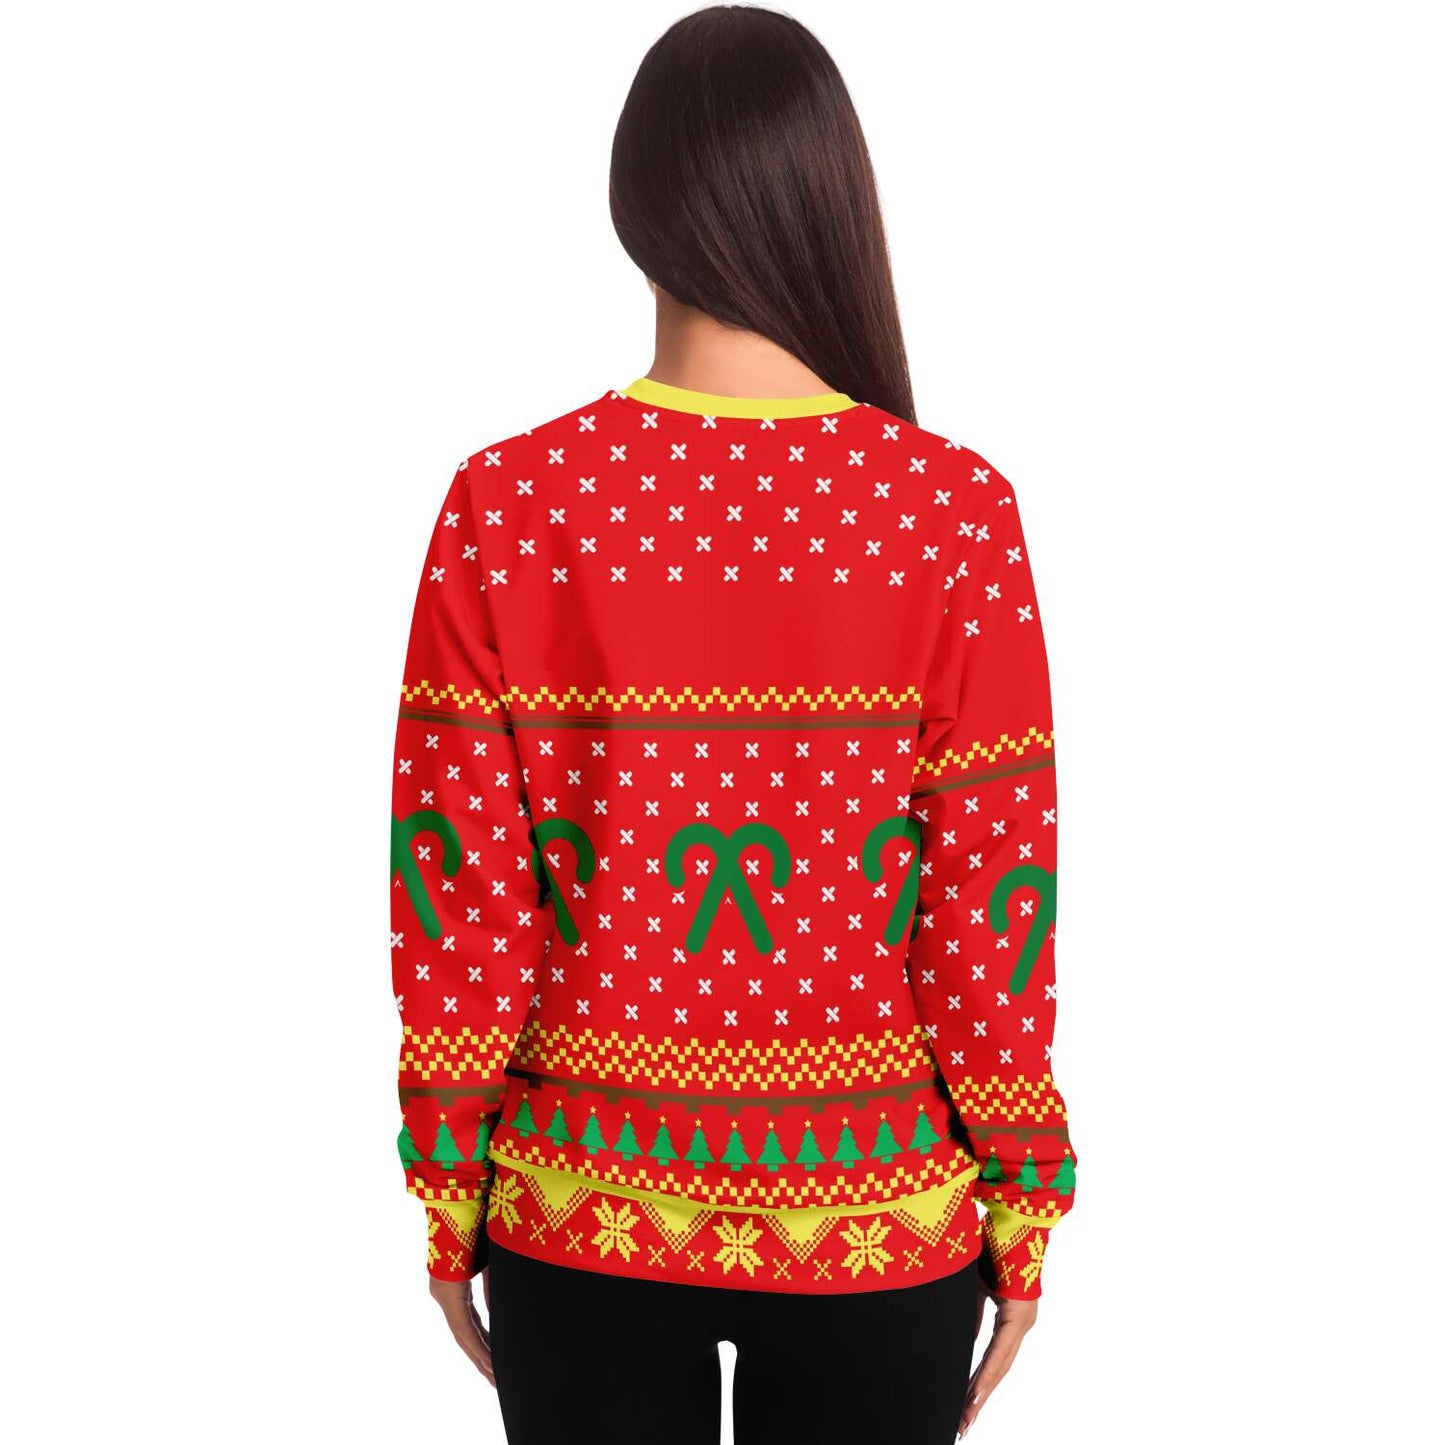 Too Lit to Quit Ugly Christmas Sweatshirt Fashion Sweatshirt - AOP Subliminator 